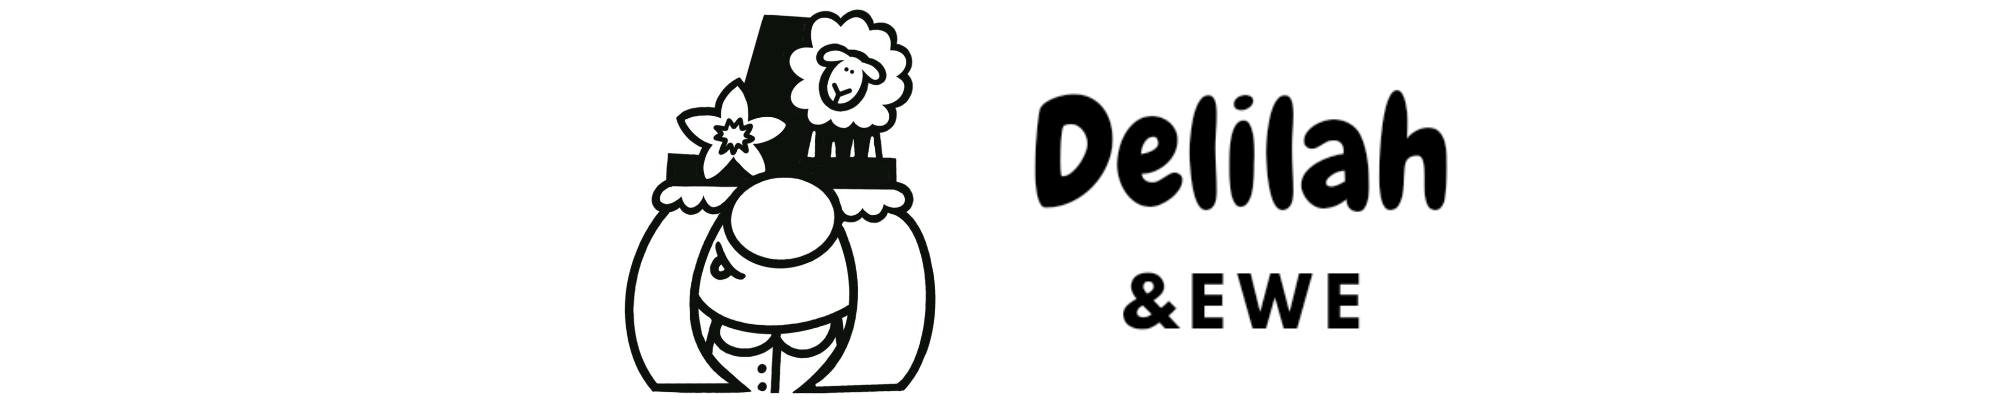 Delilah and Ewe Ltd